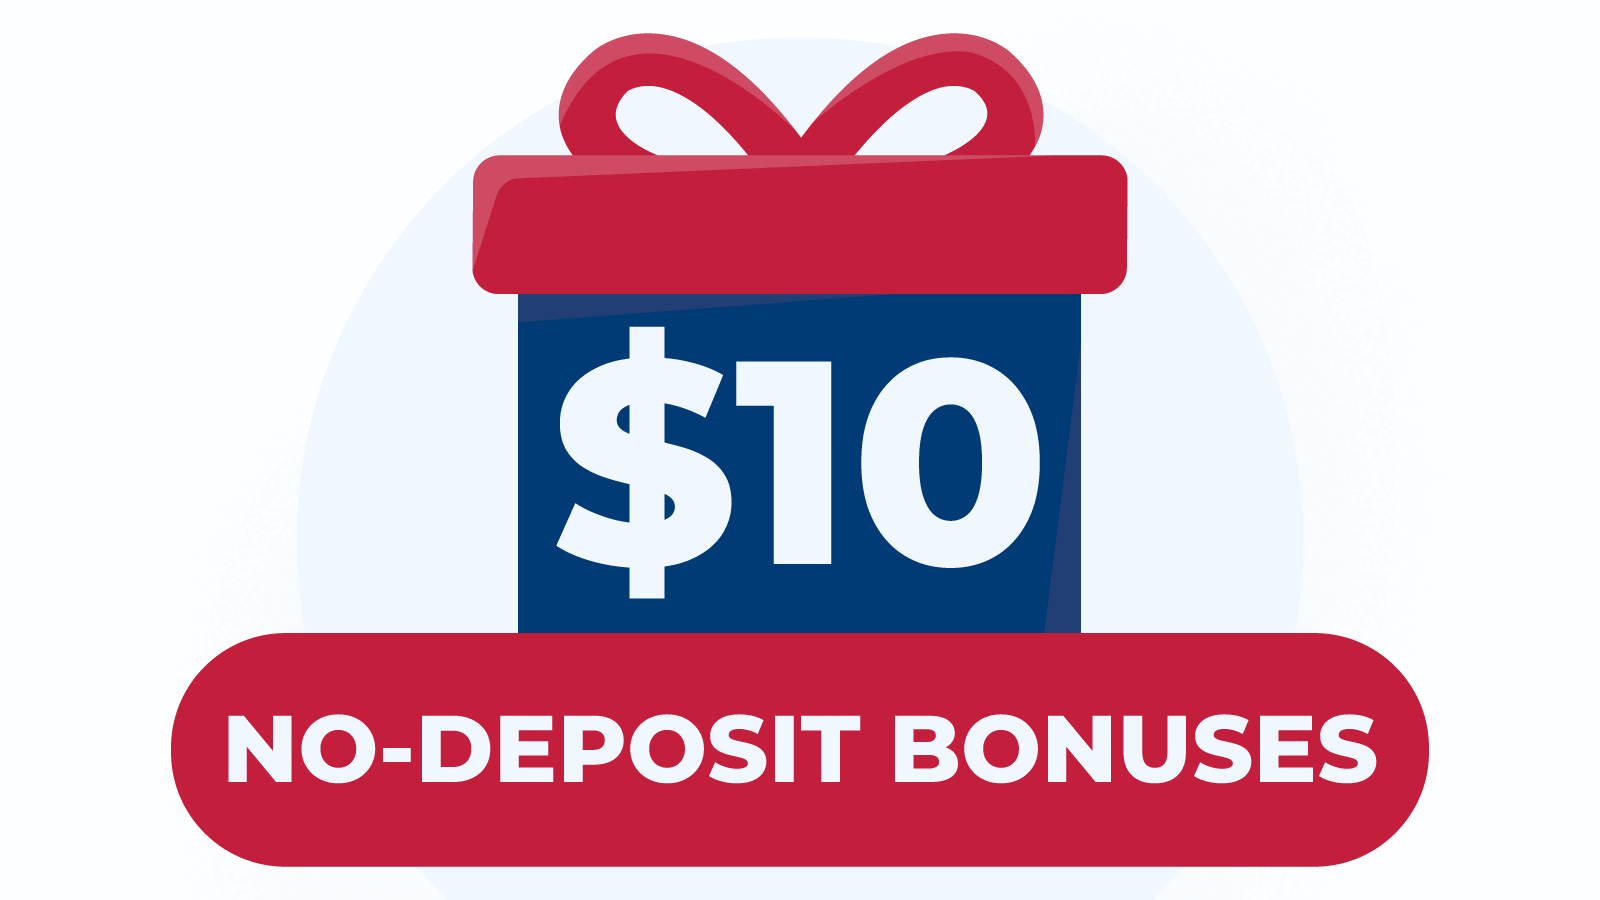 C$10 no-deposit bonuses